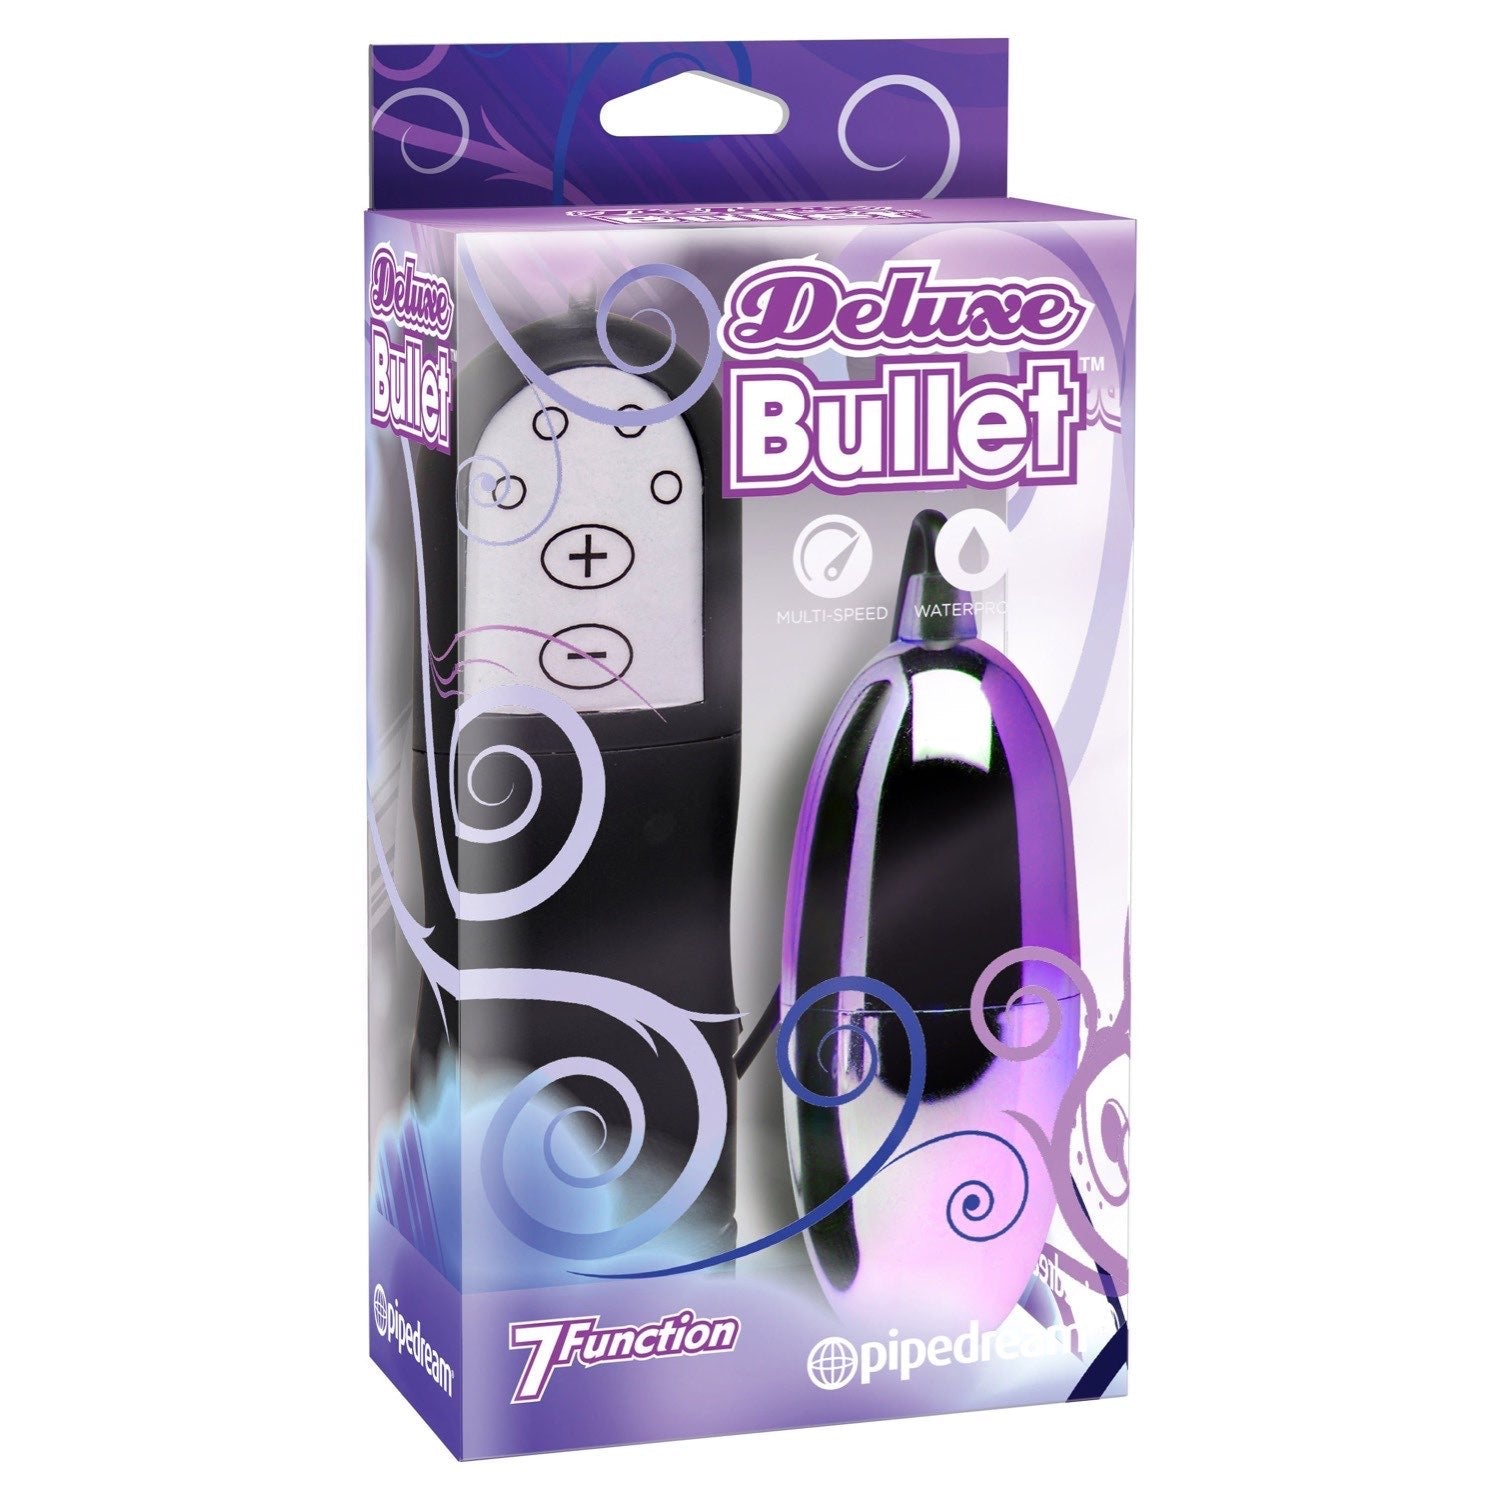  Deluxe Bullet - Metallic Purple Bullet by Pipedream